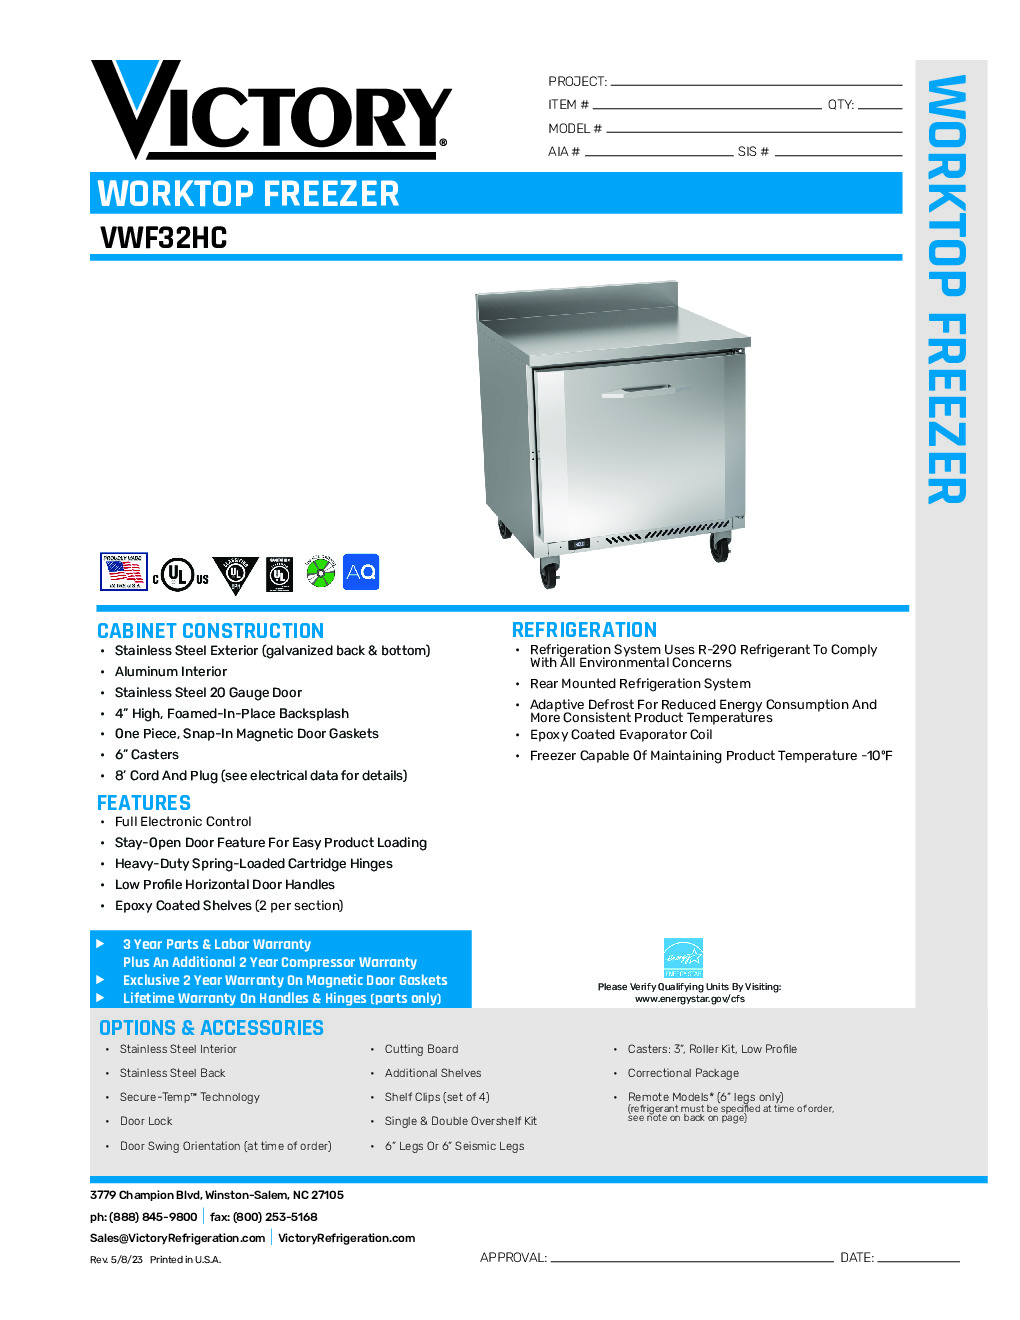 Victory VWF32HC Work Top Freezer Counter